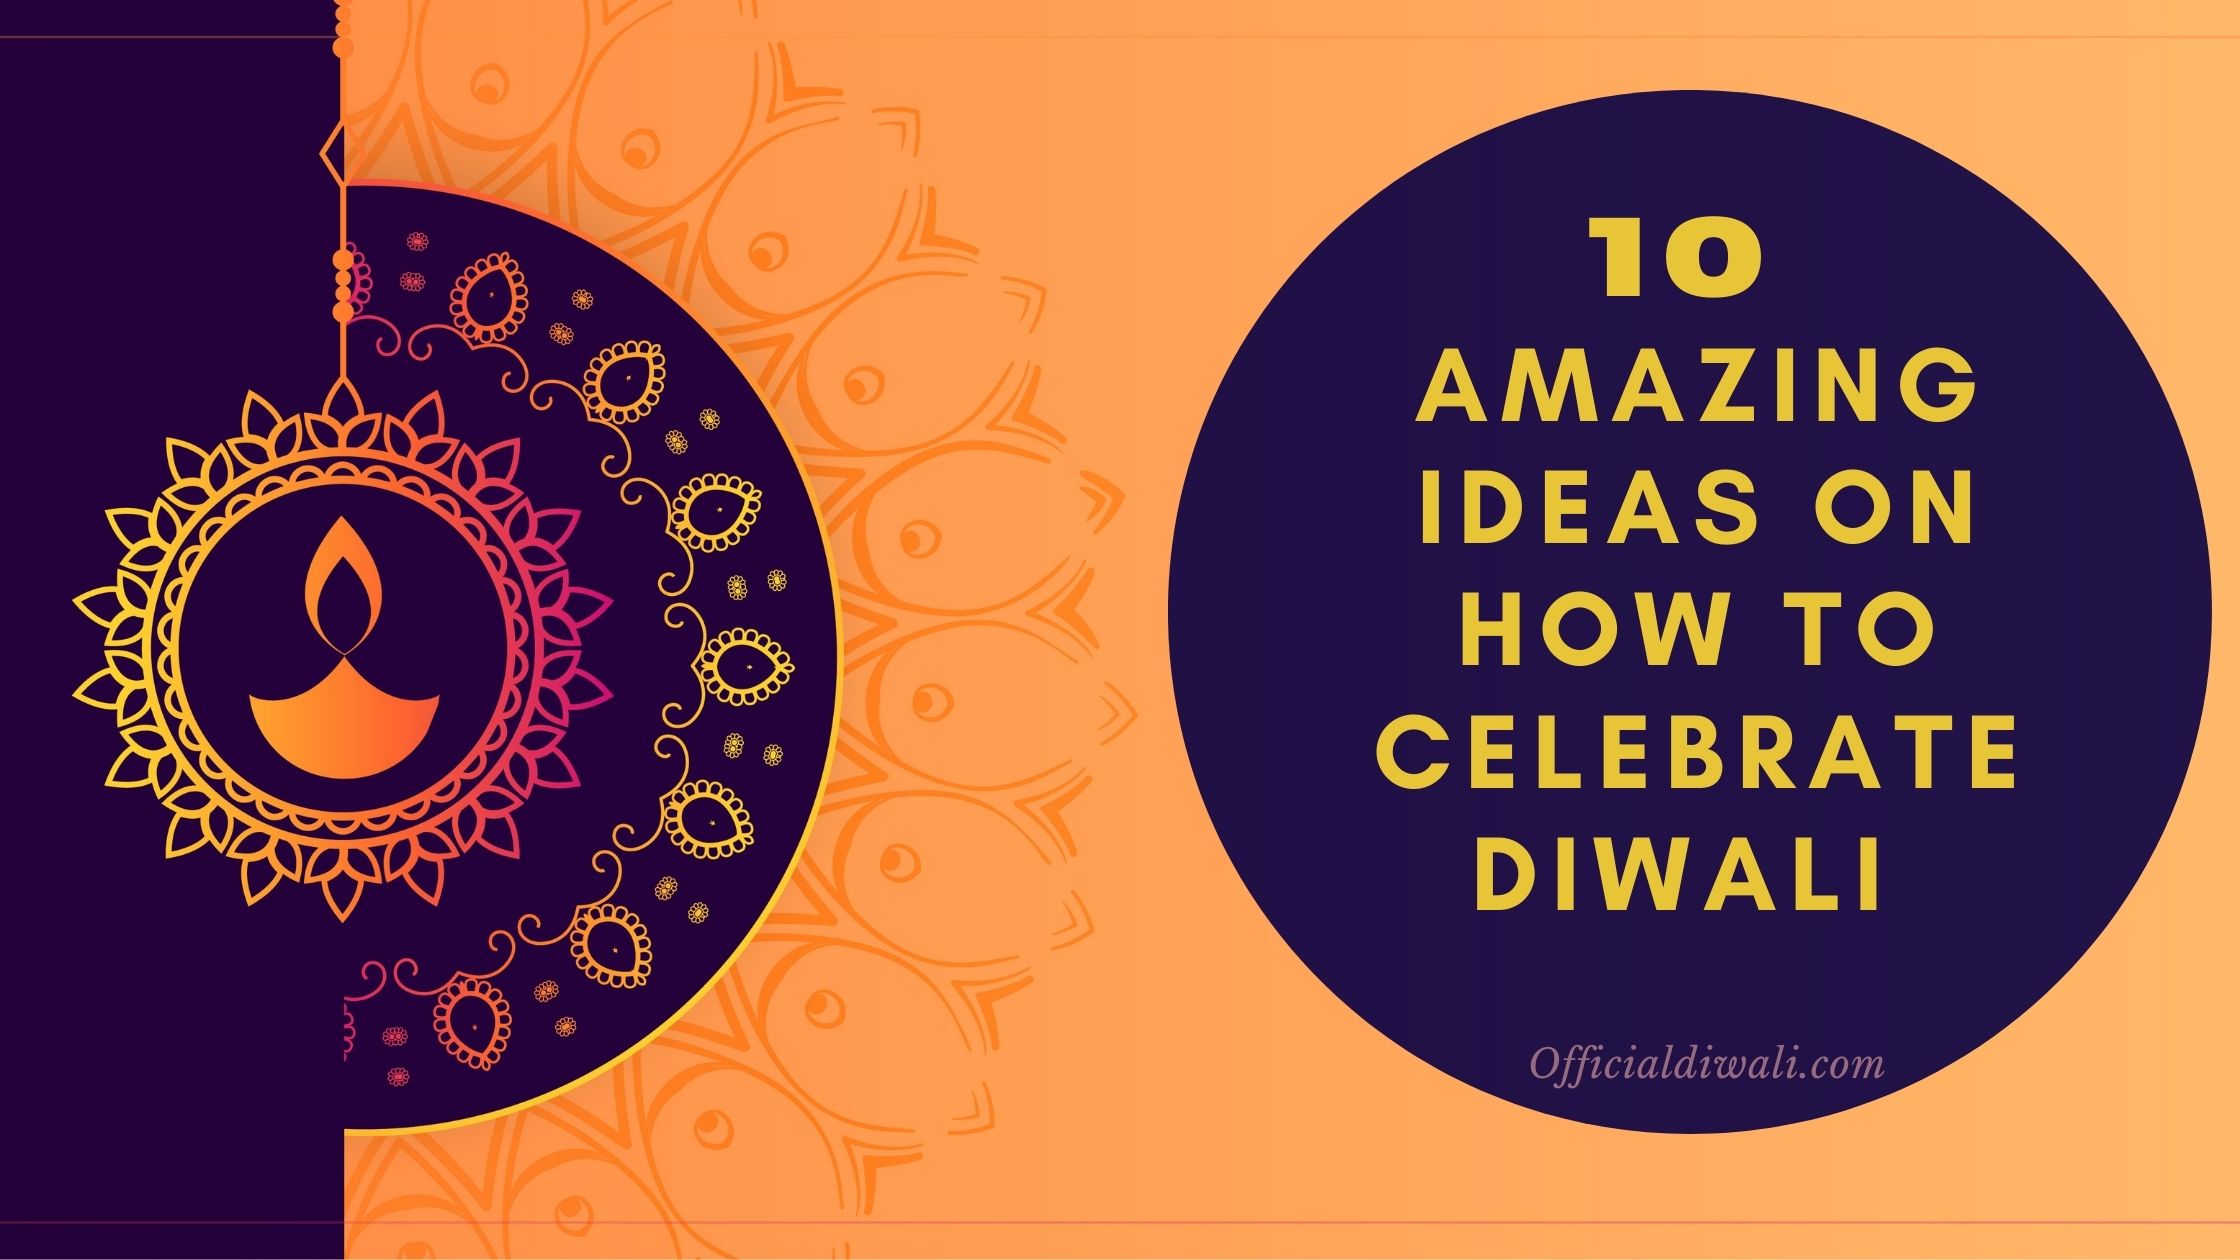 10 Amazing Ideas on How to Celebrate Diwali 2021